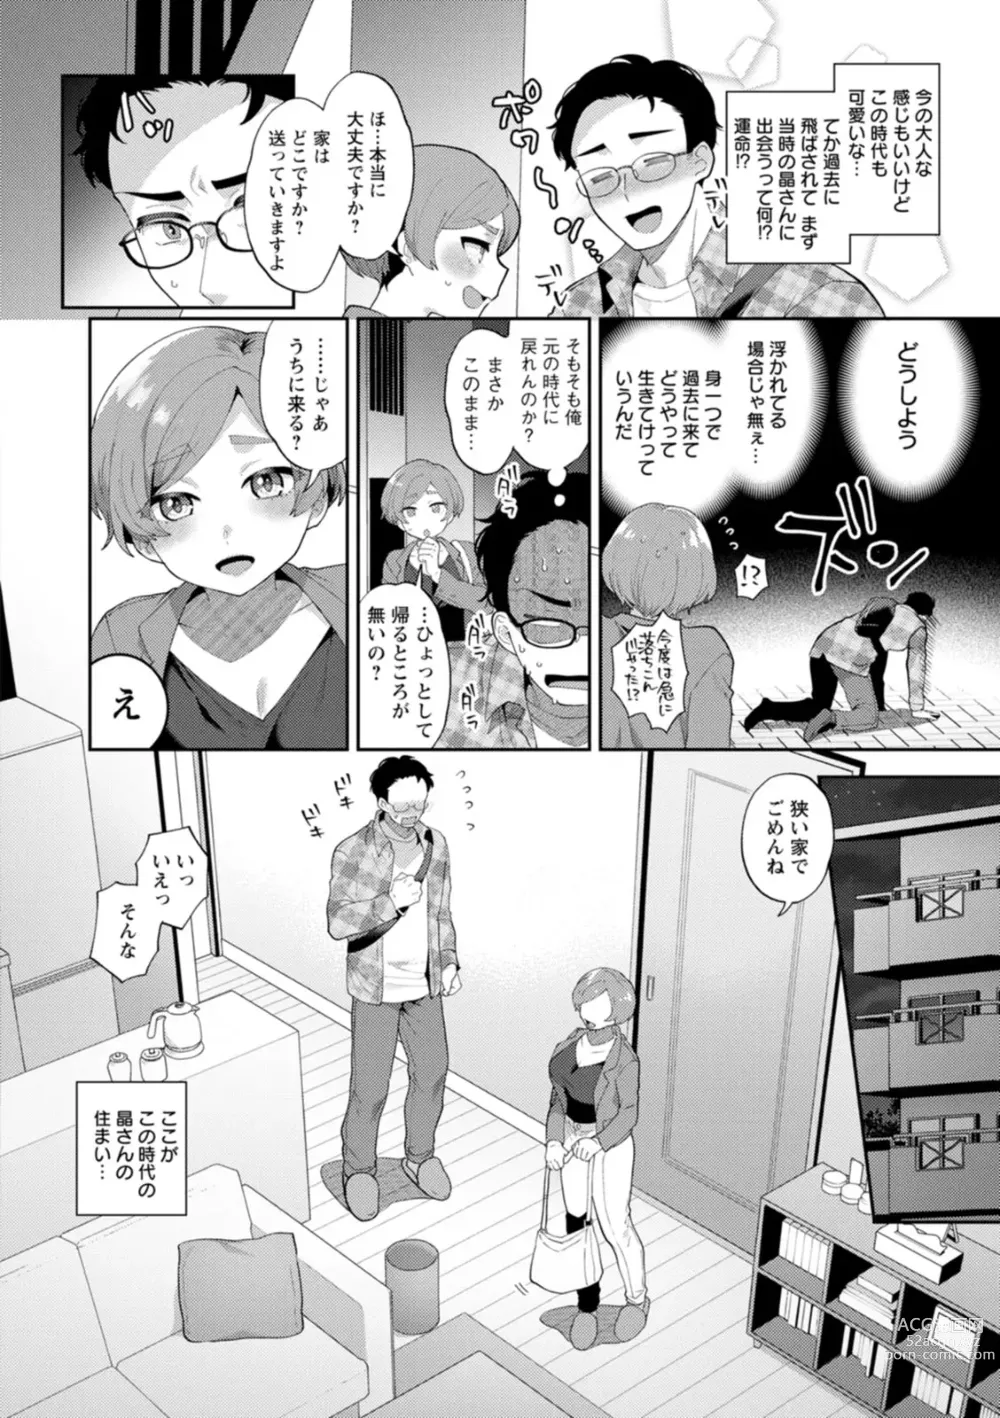 Page 12 of manga Kimito Torokete Musubarete